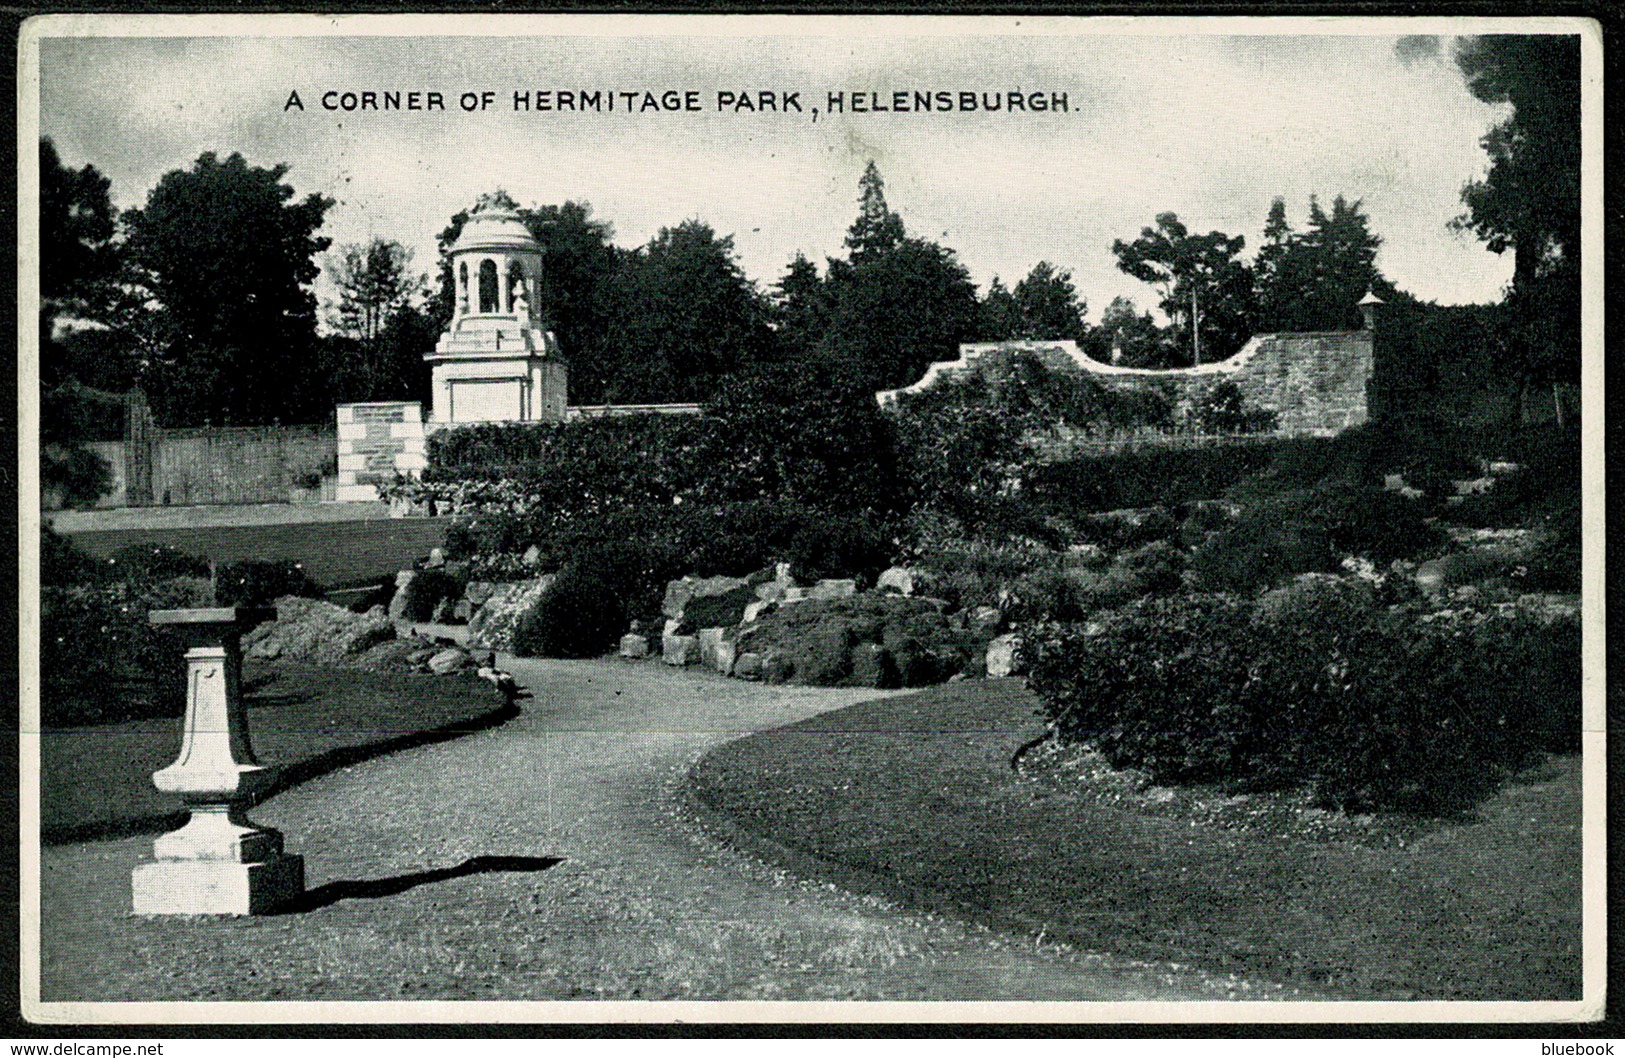 Ref 1239 - 1938 Postcard - Hermitage Park Helensburgh - Argyllshire Scotland - Argyllshire